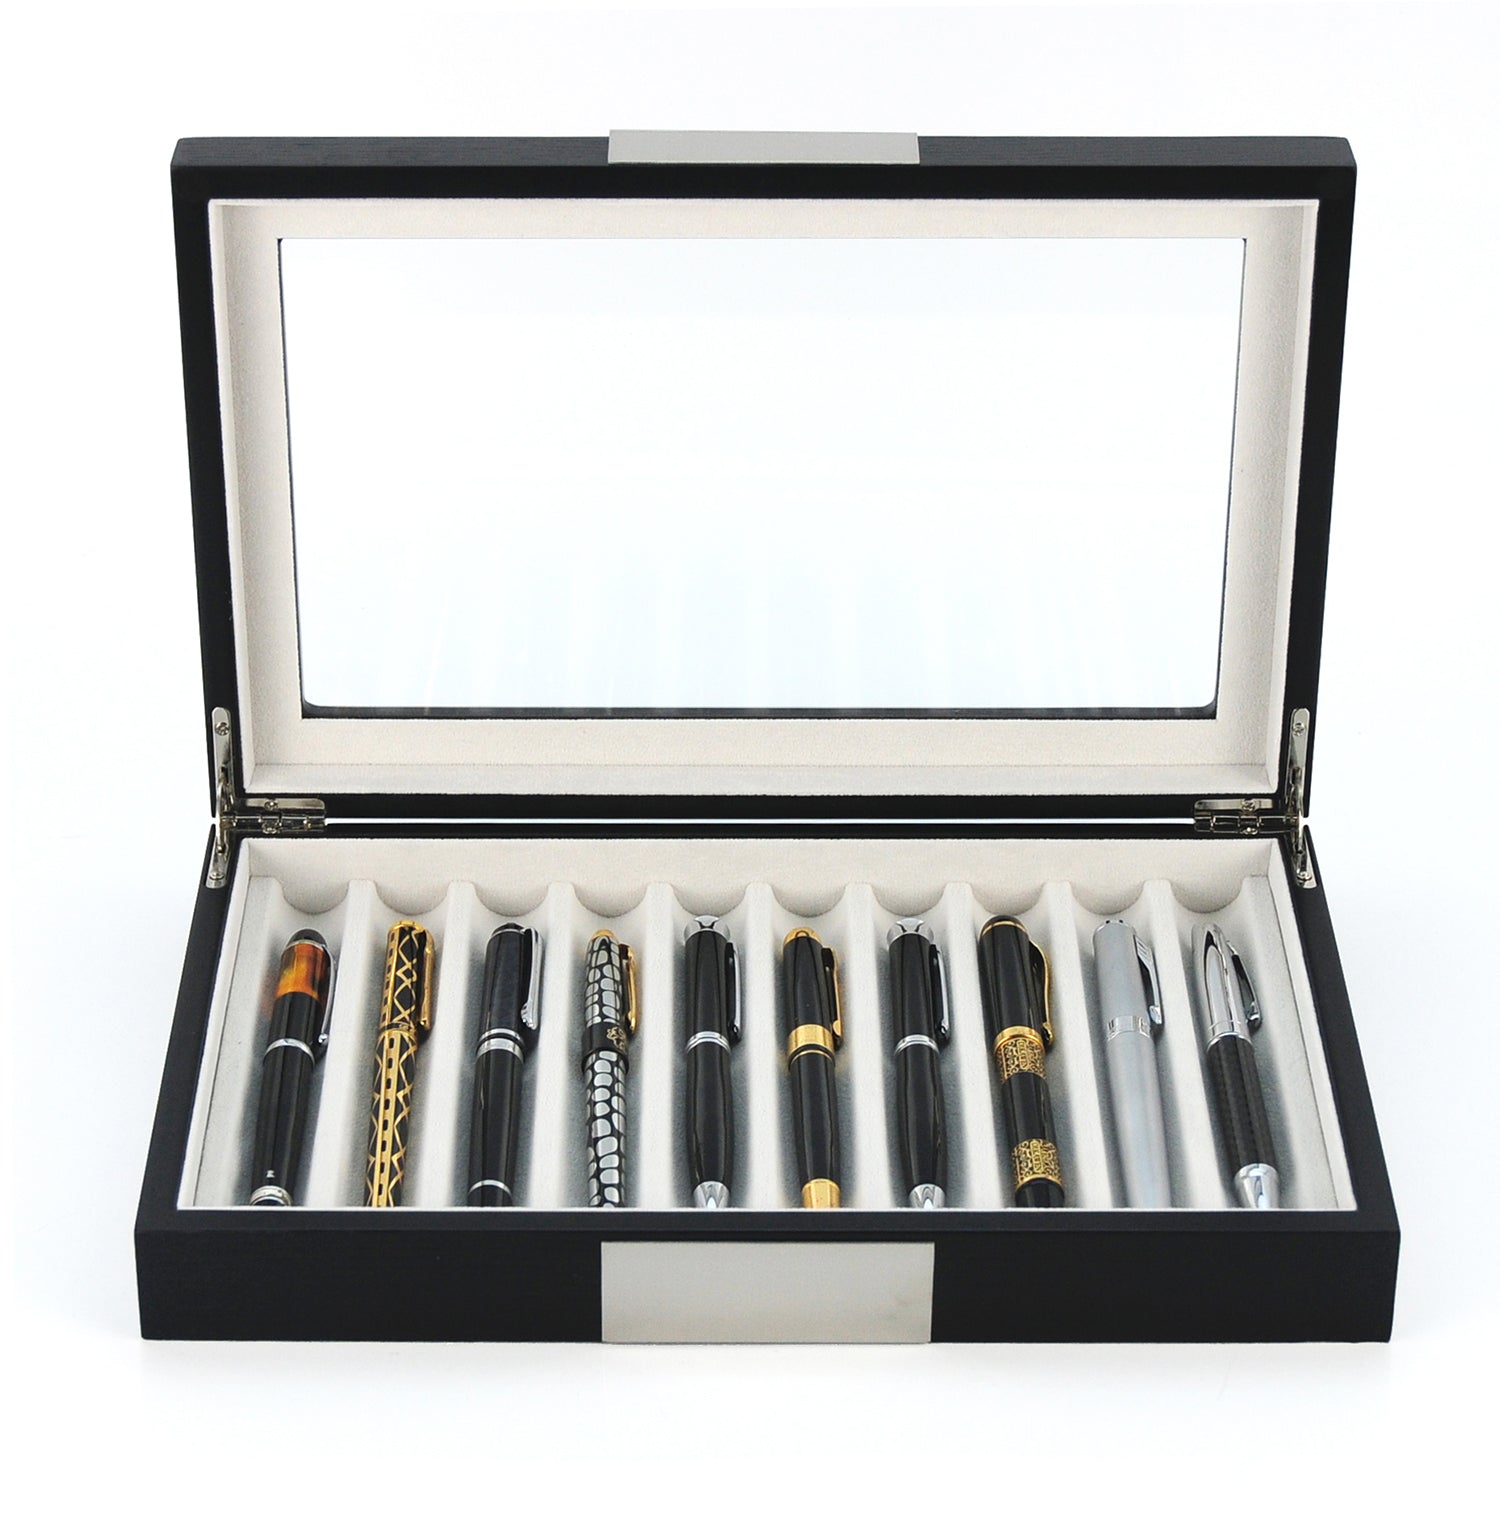 10 Piece Black Ebony Wood Pen Display Case Storage and Fountain